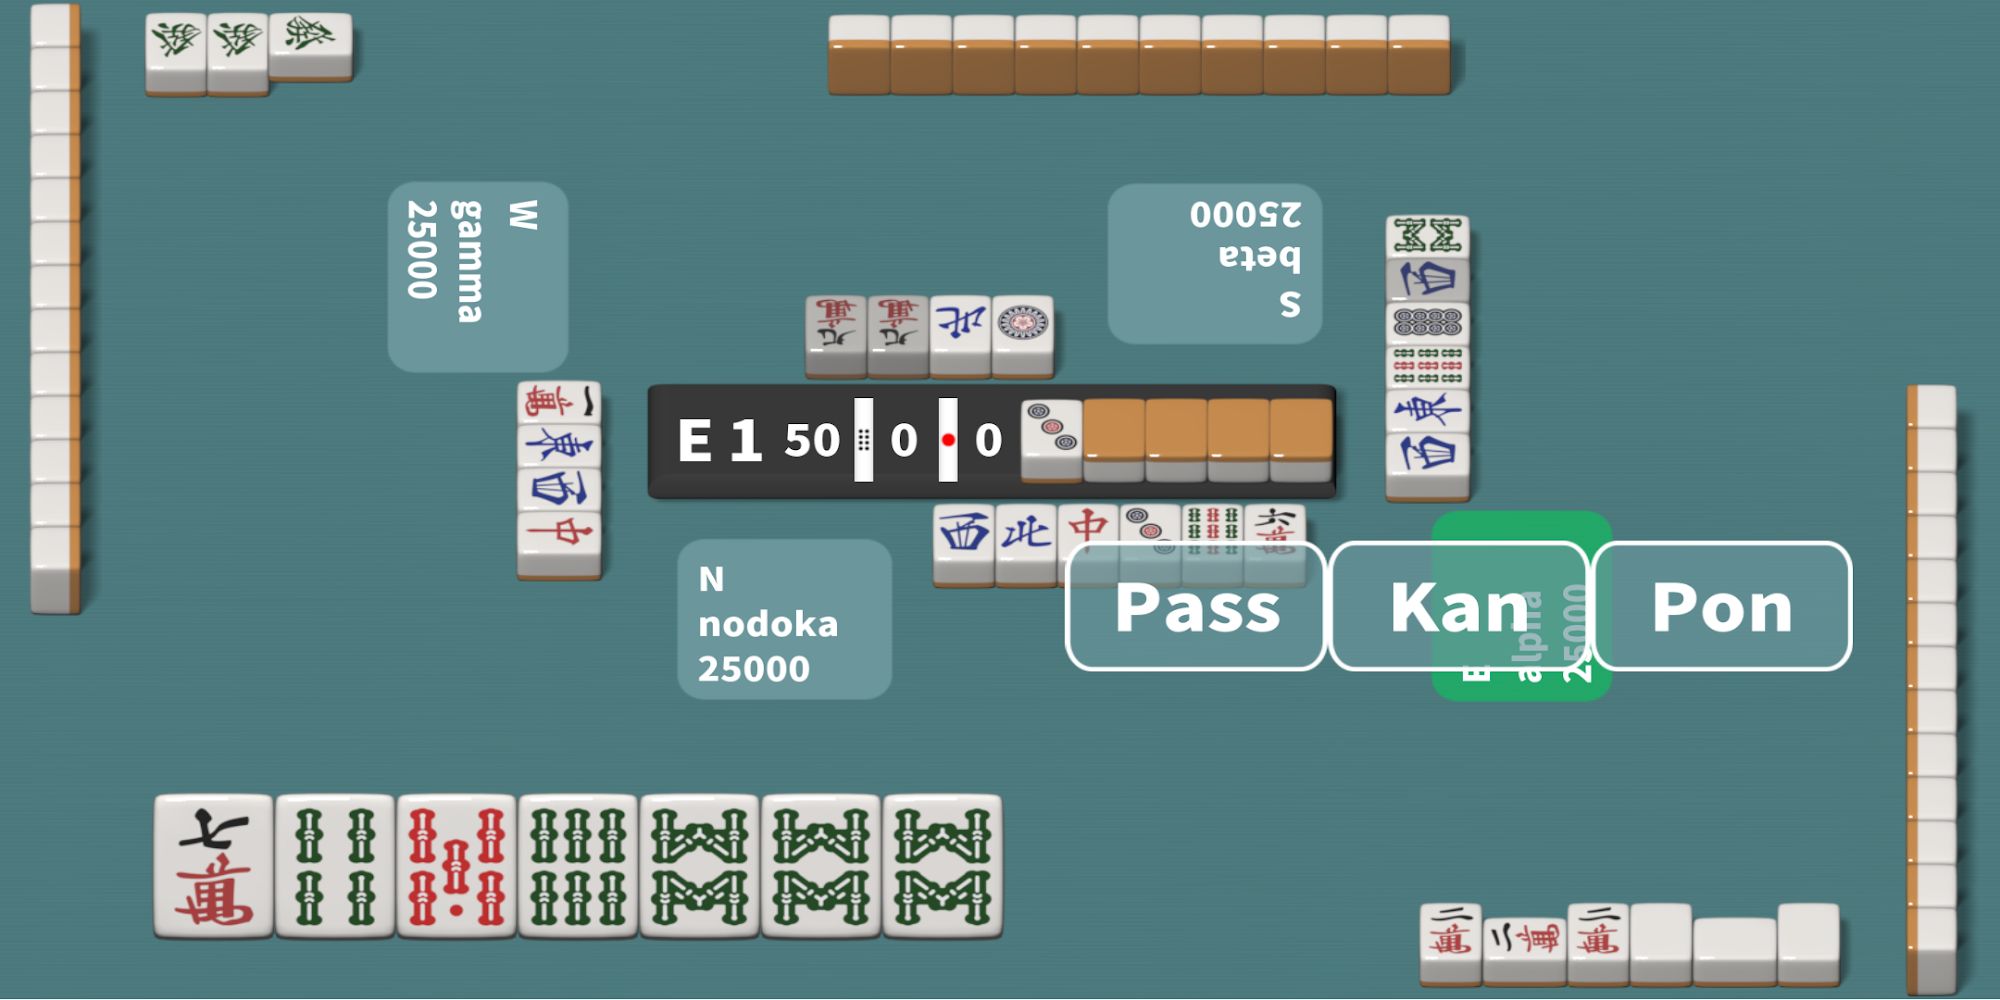 Full version of Android Mahjong game apk R Mahjong - Riichi Mahjong for tablet and phone.